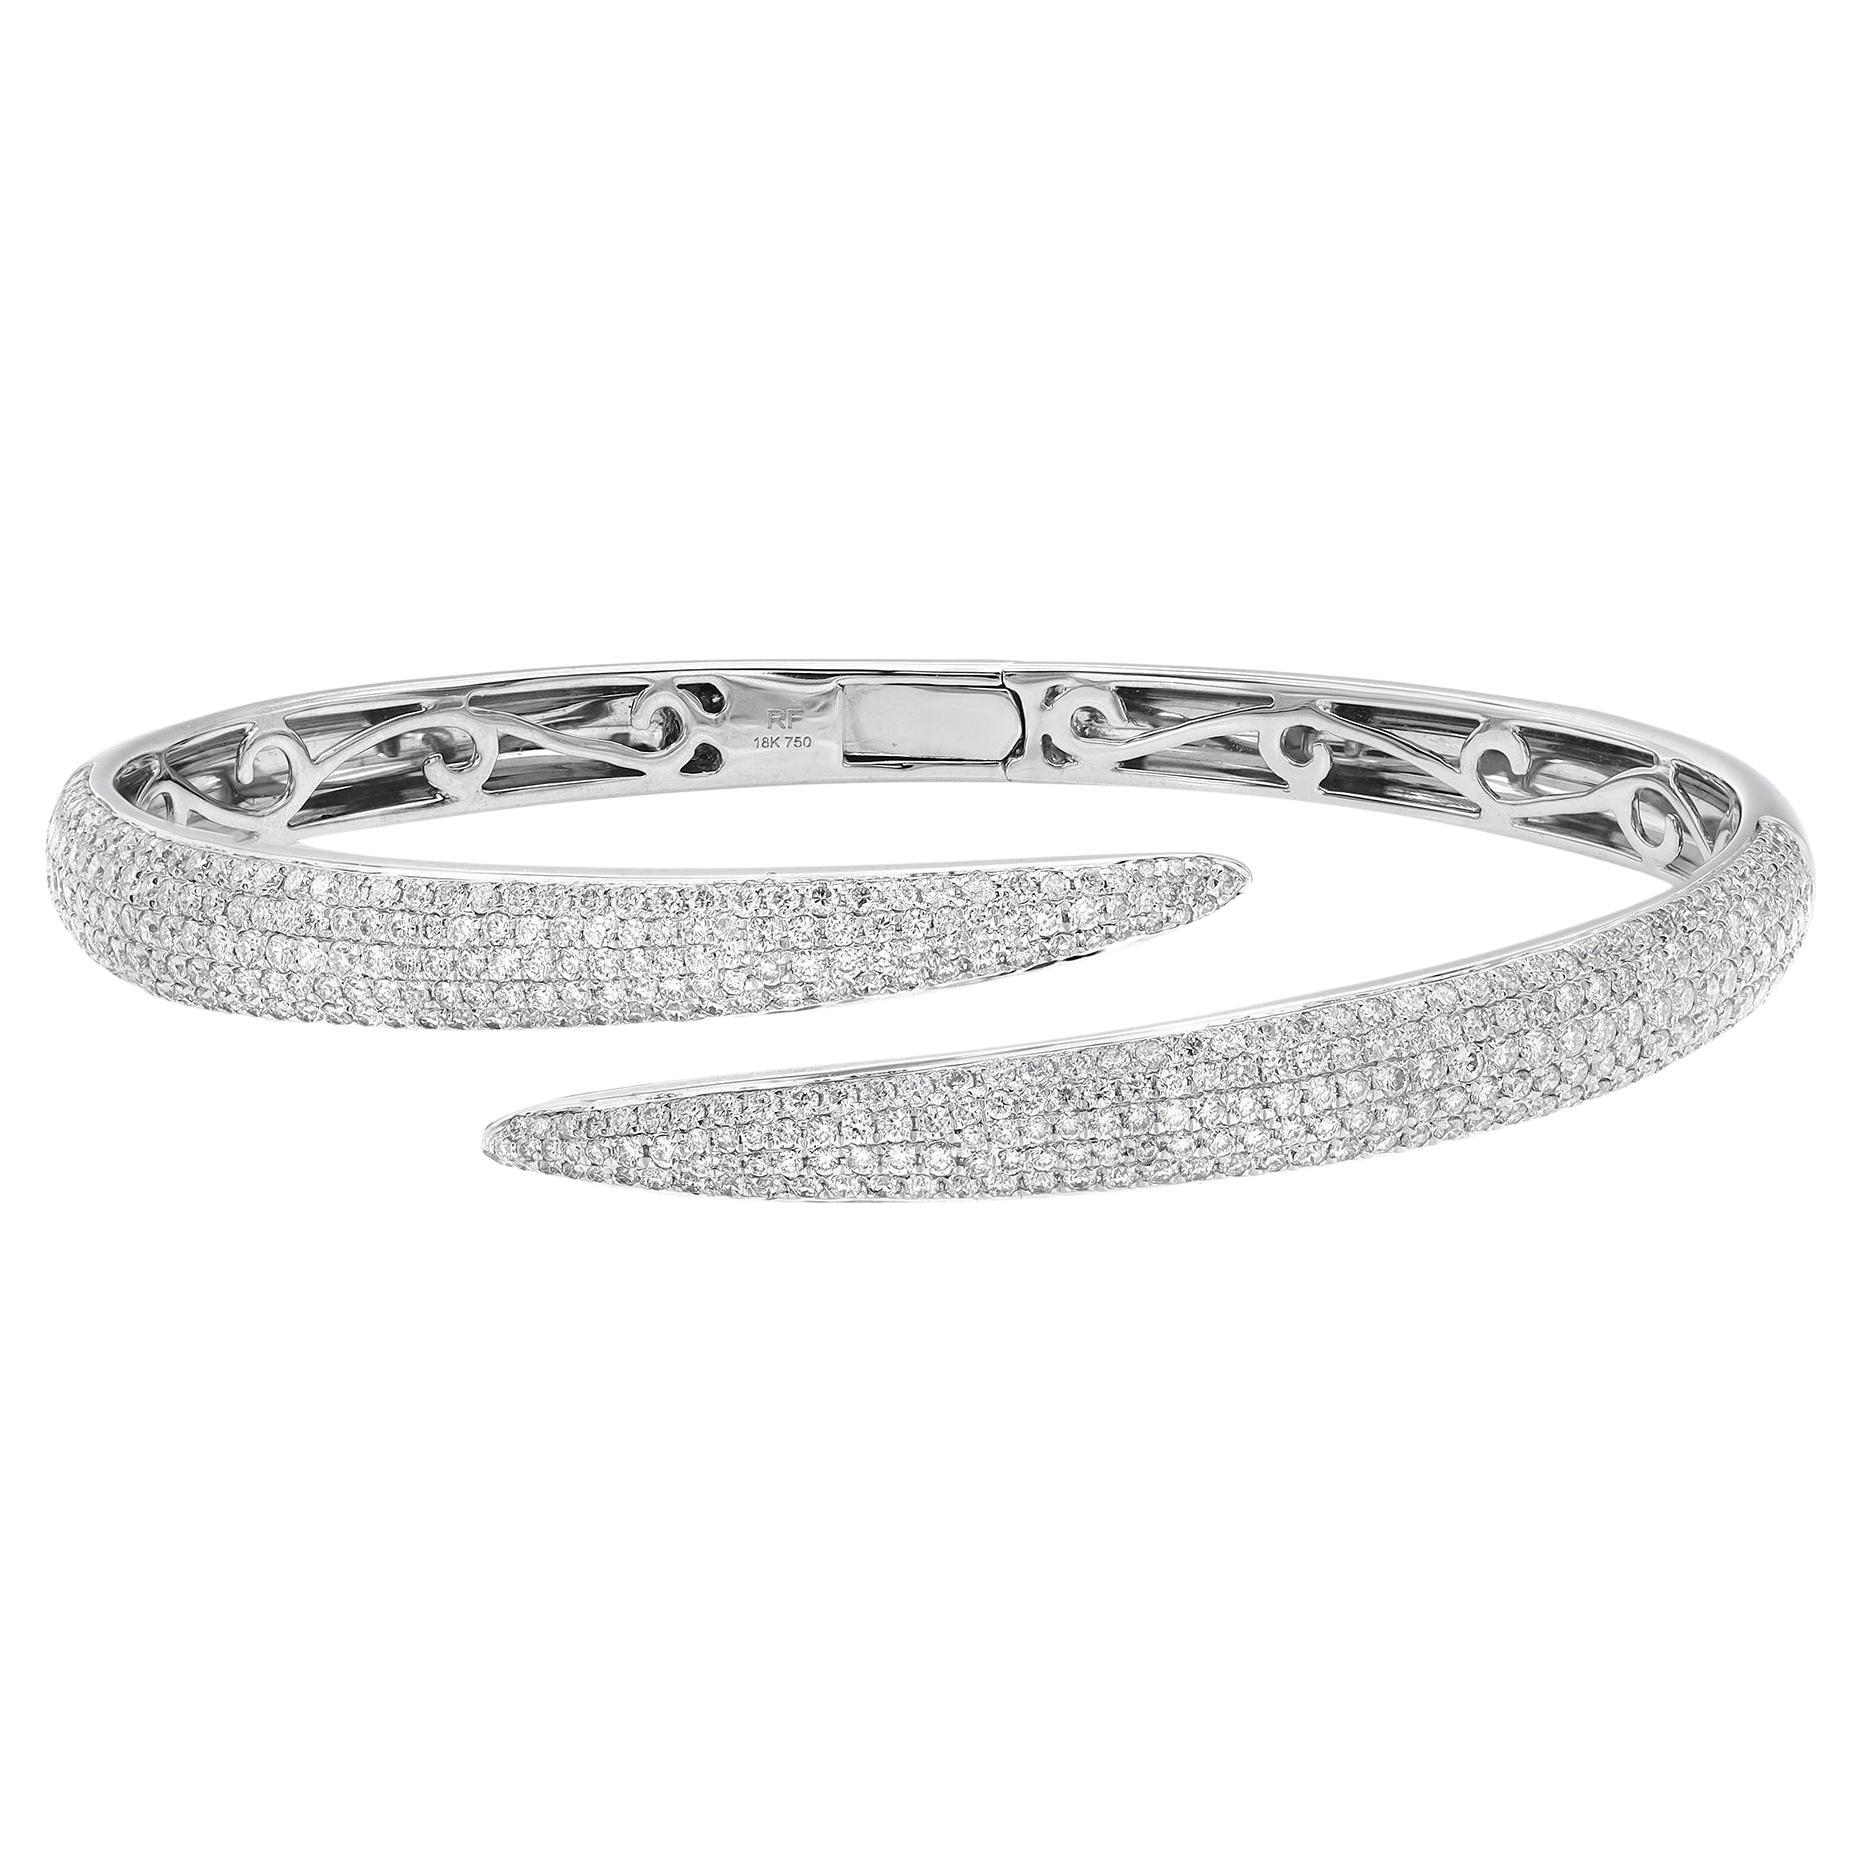 Rachel Koen Pave Set Round Cut Diamond Bangle Bracelet 18K White Gold 2.64Cttw